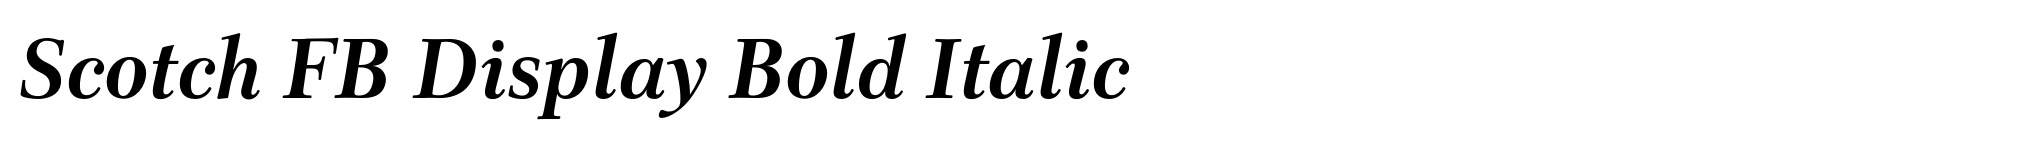 Scotch FB Display Bold Italic image